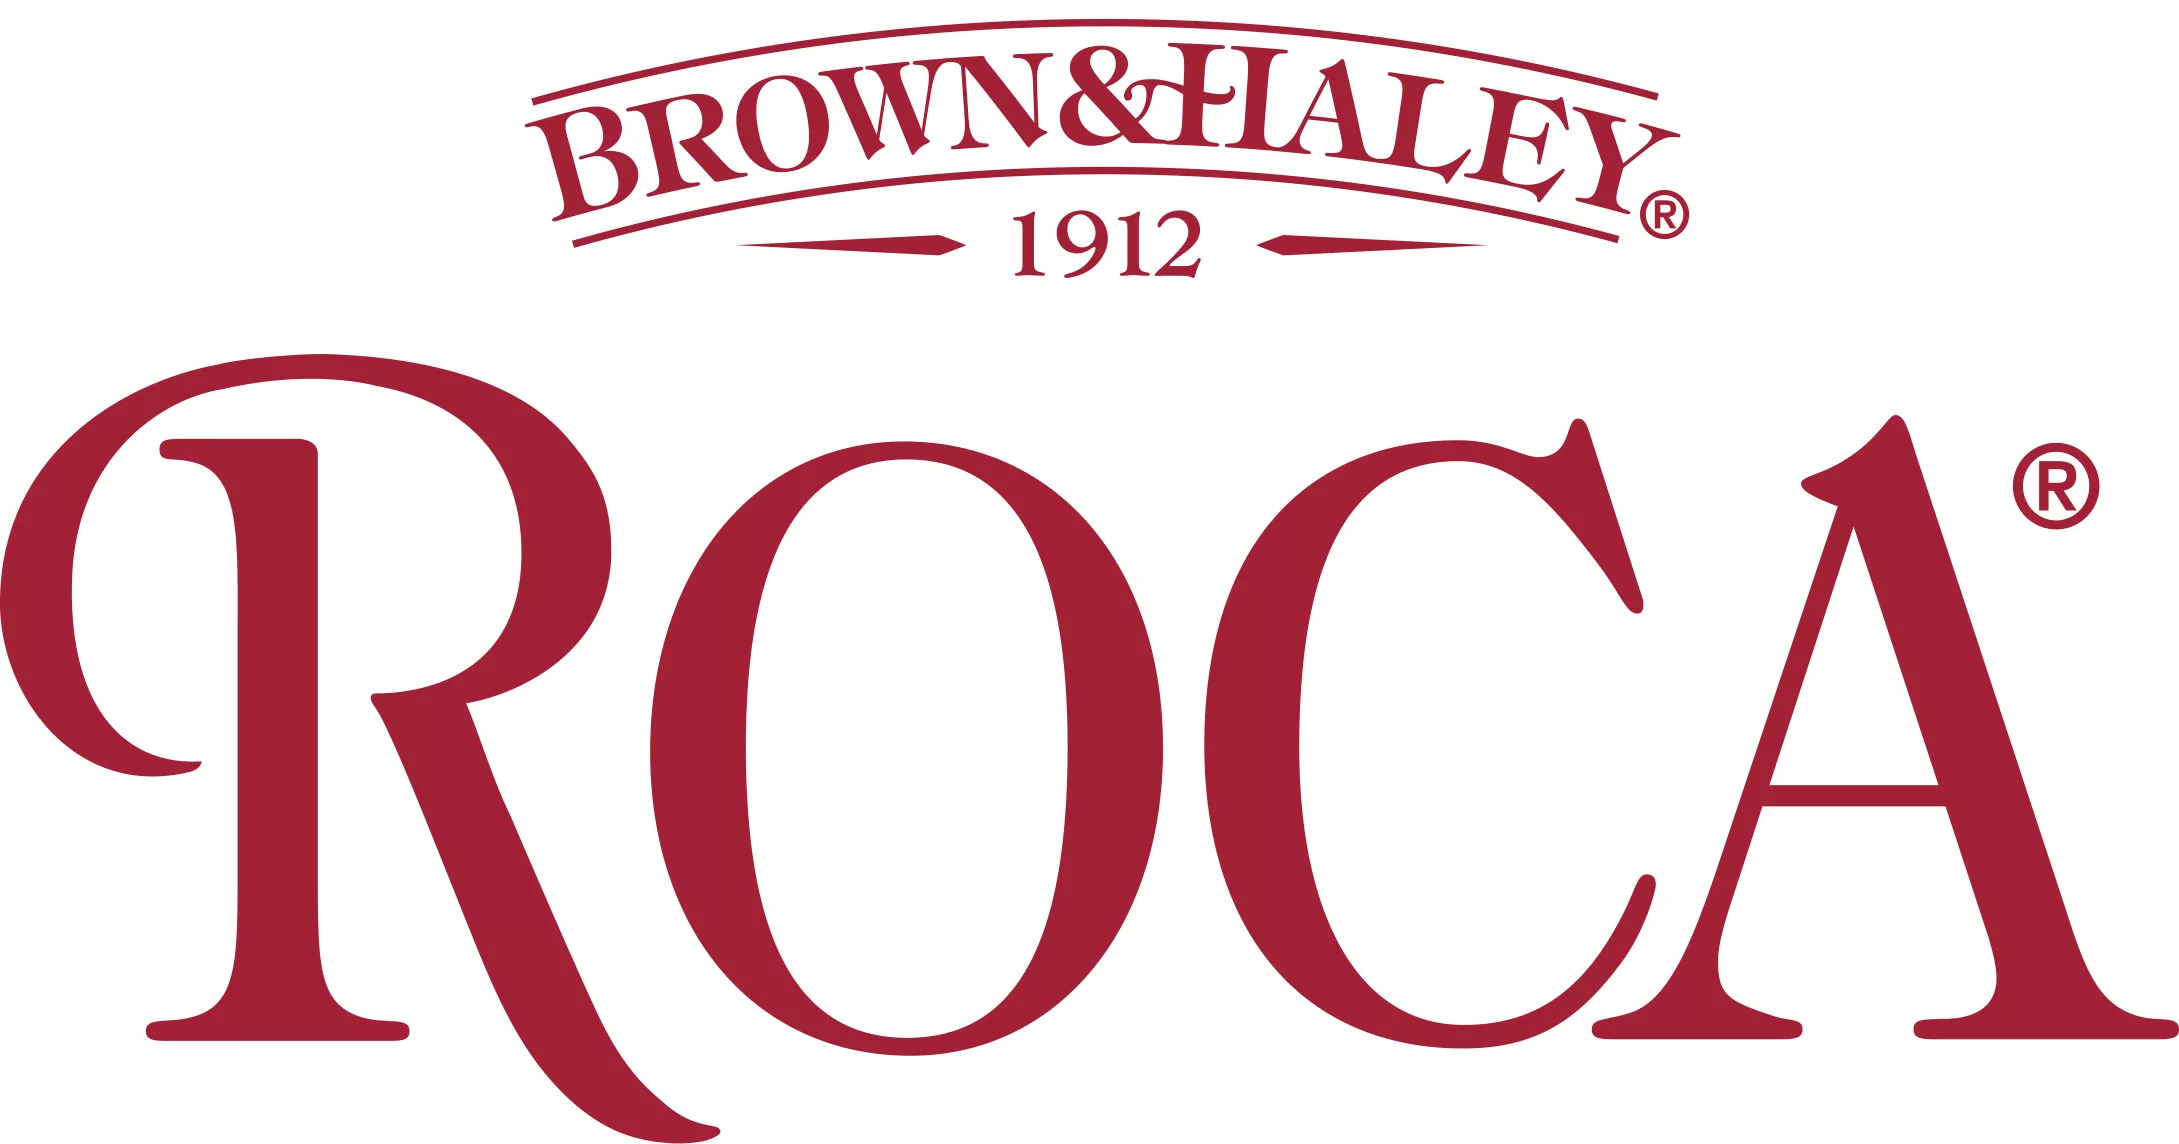 Brown and Haley Roca Logo